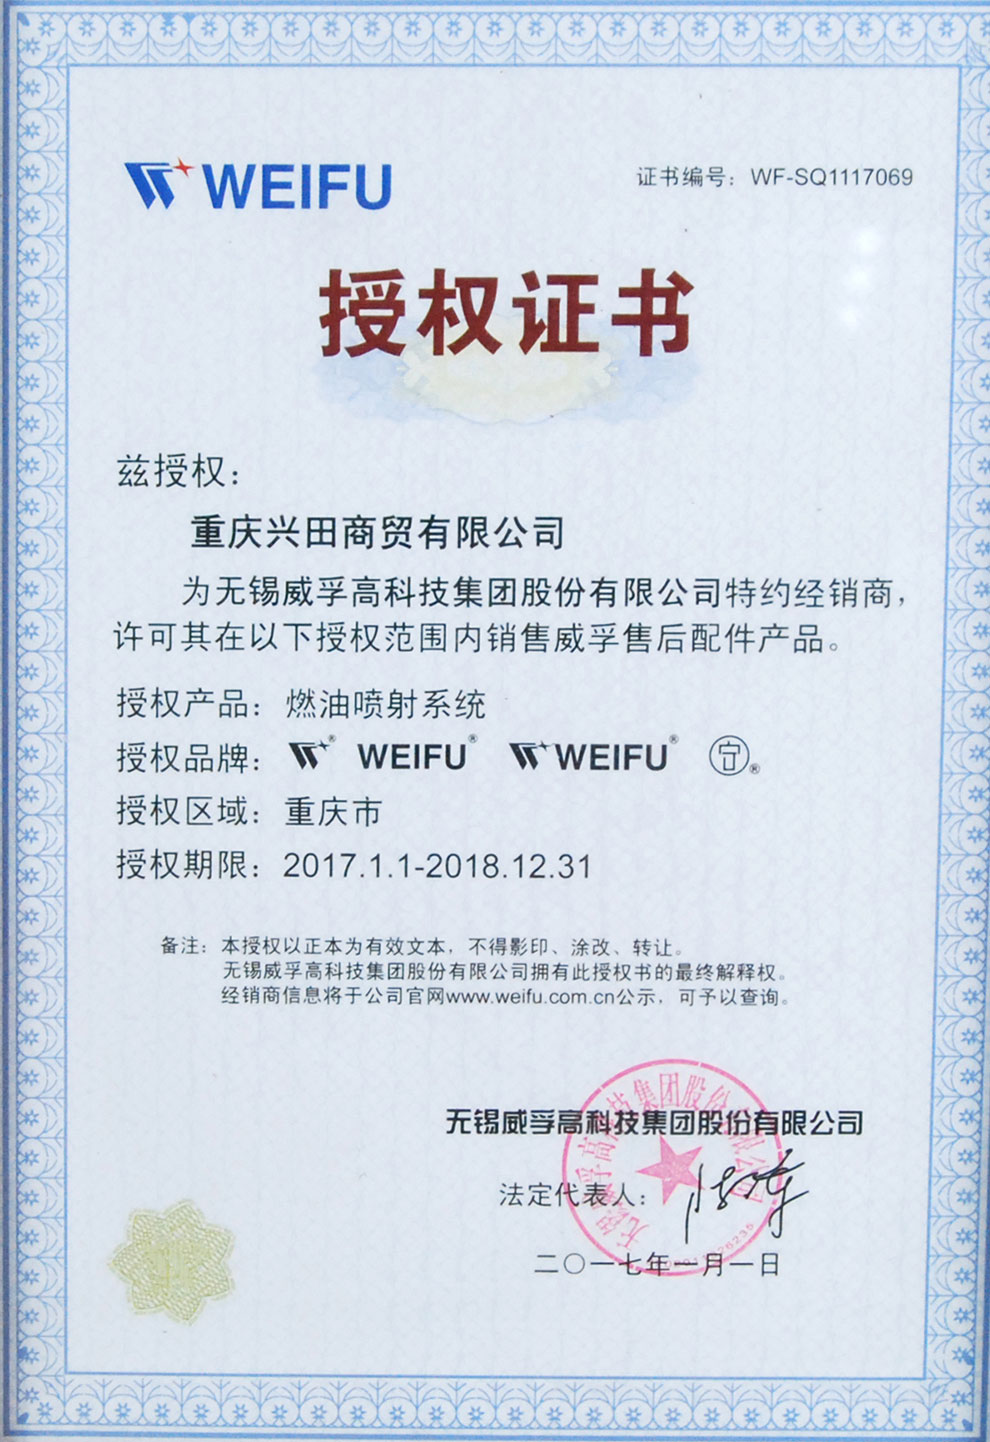 Authorization certificate